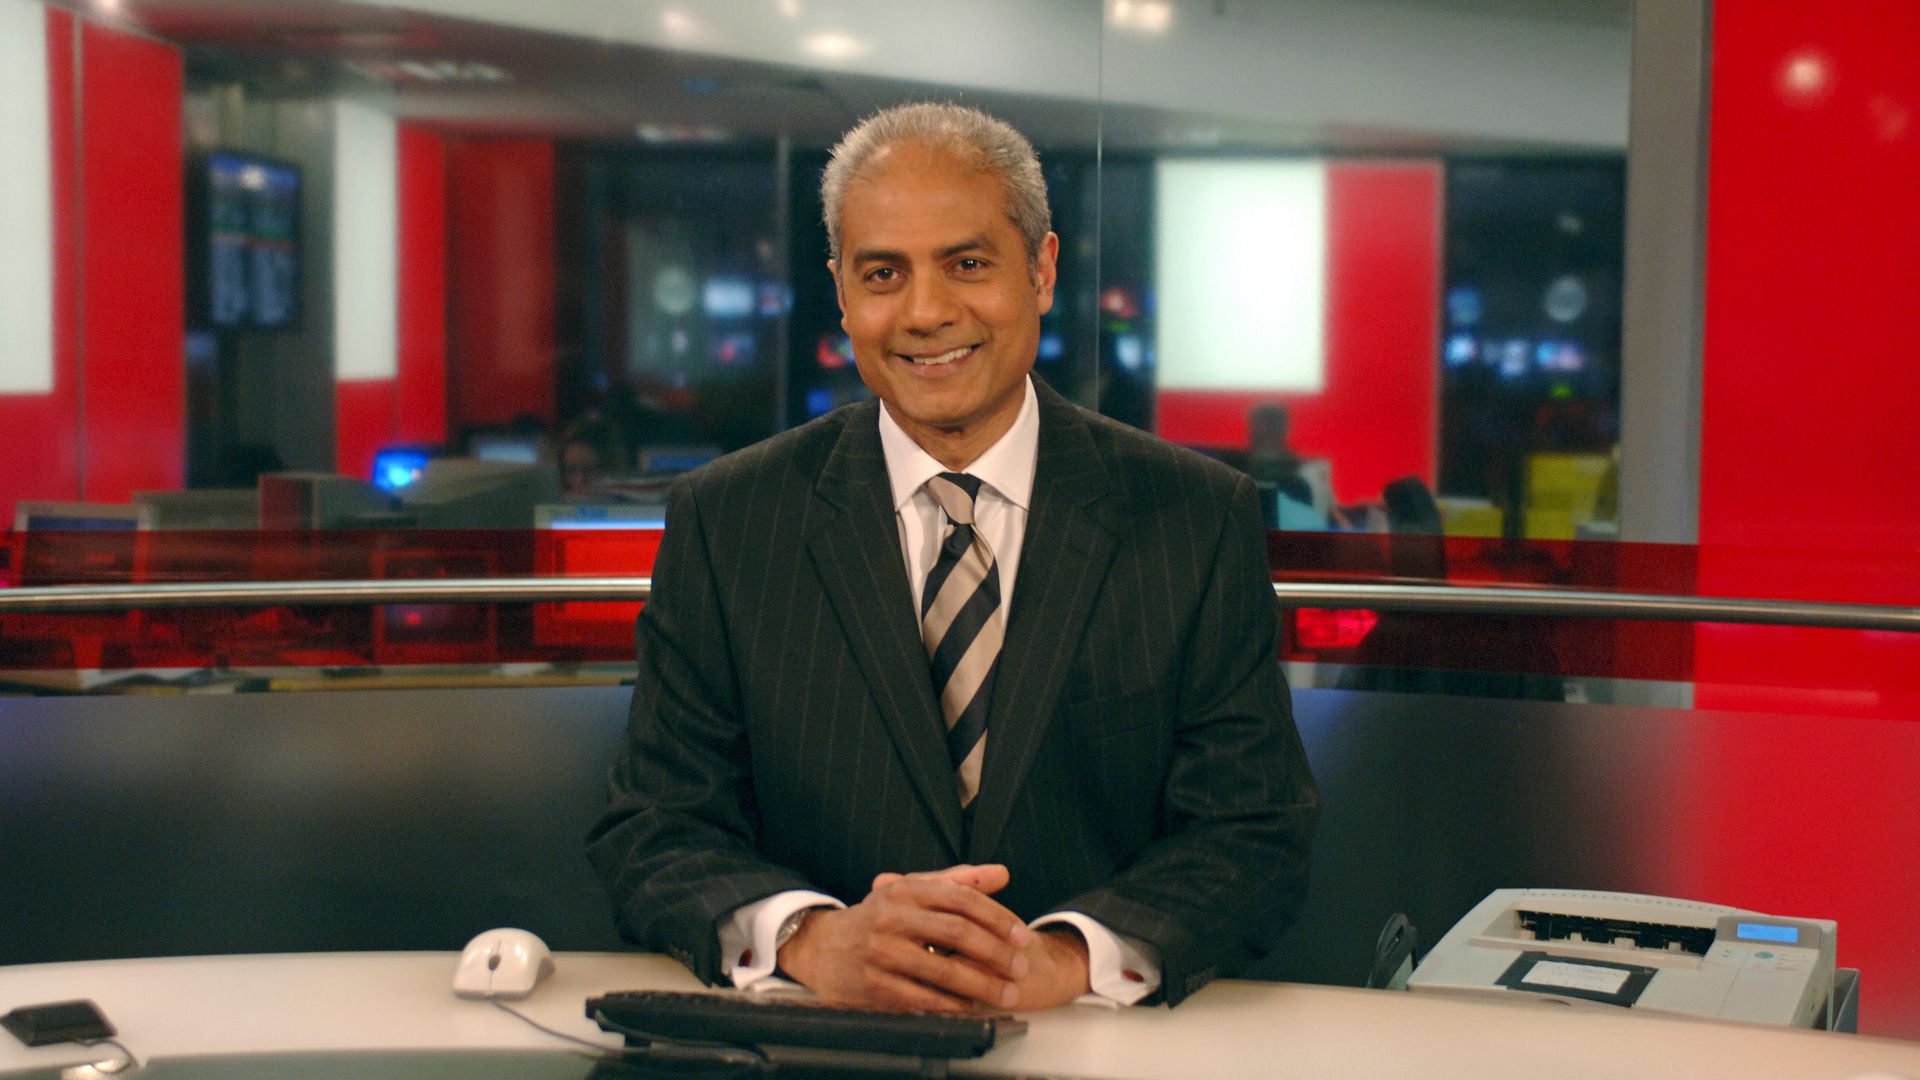 Newsreader George Alagiah on the set of BBC World News